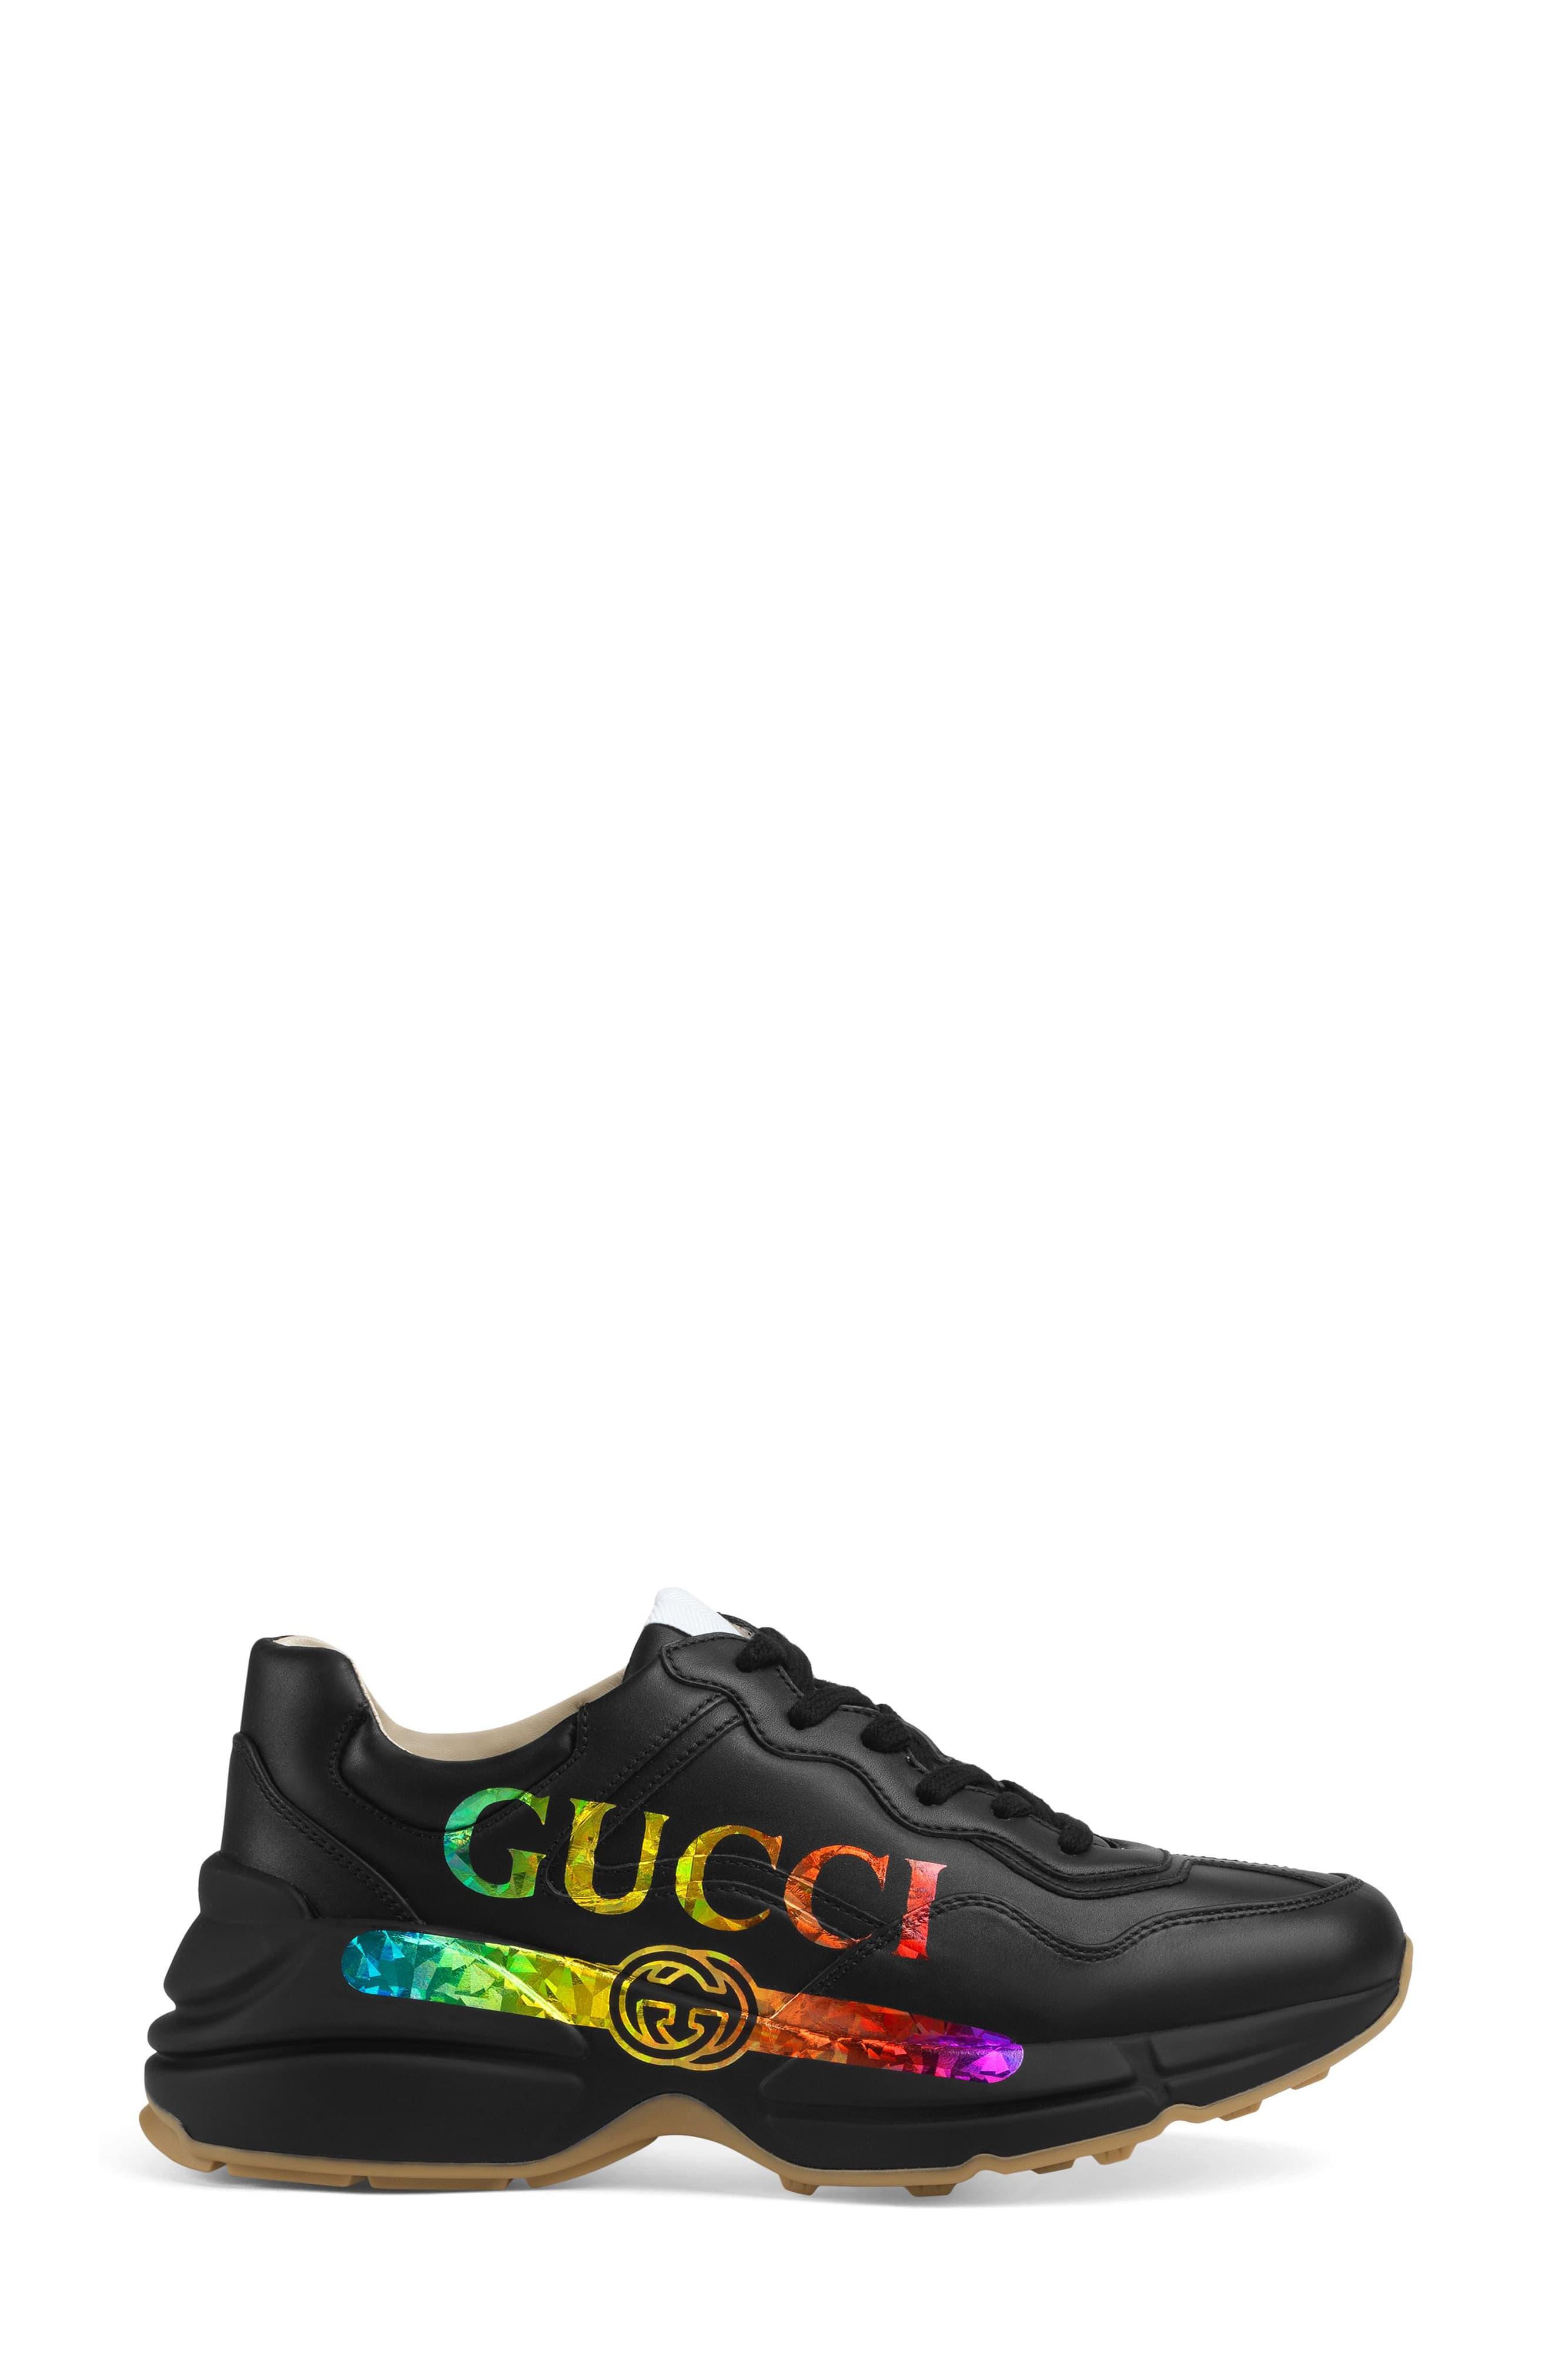 gucci rainbow trainers